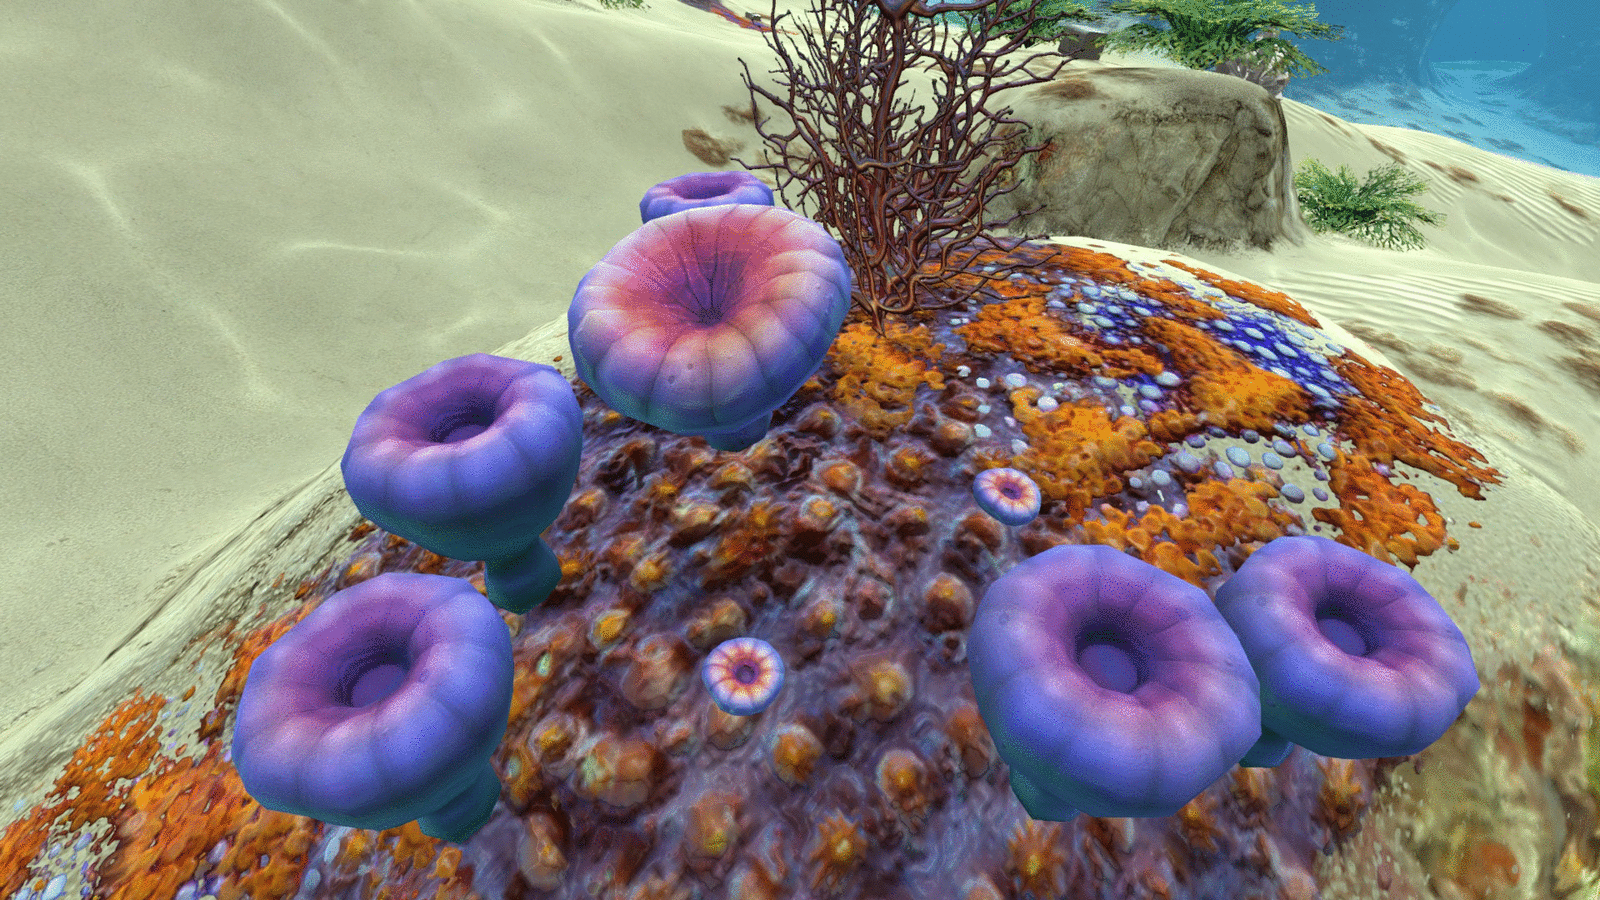 Образец мозгового коралла subnautica